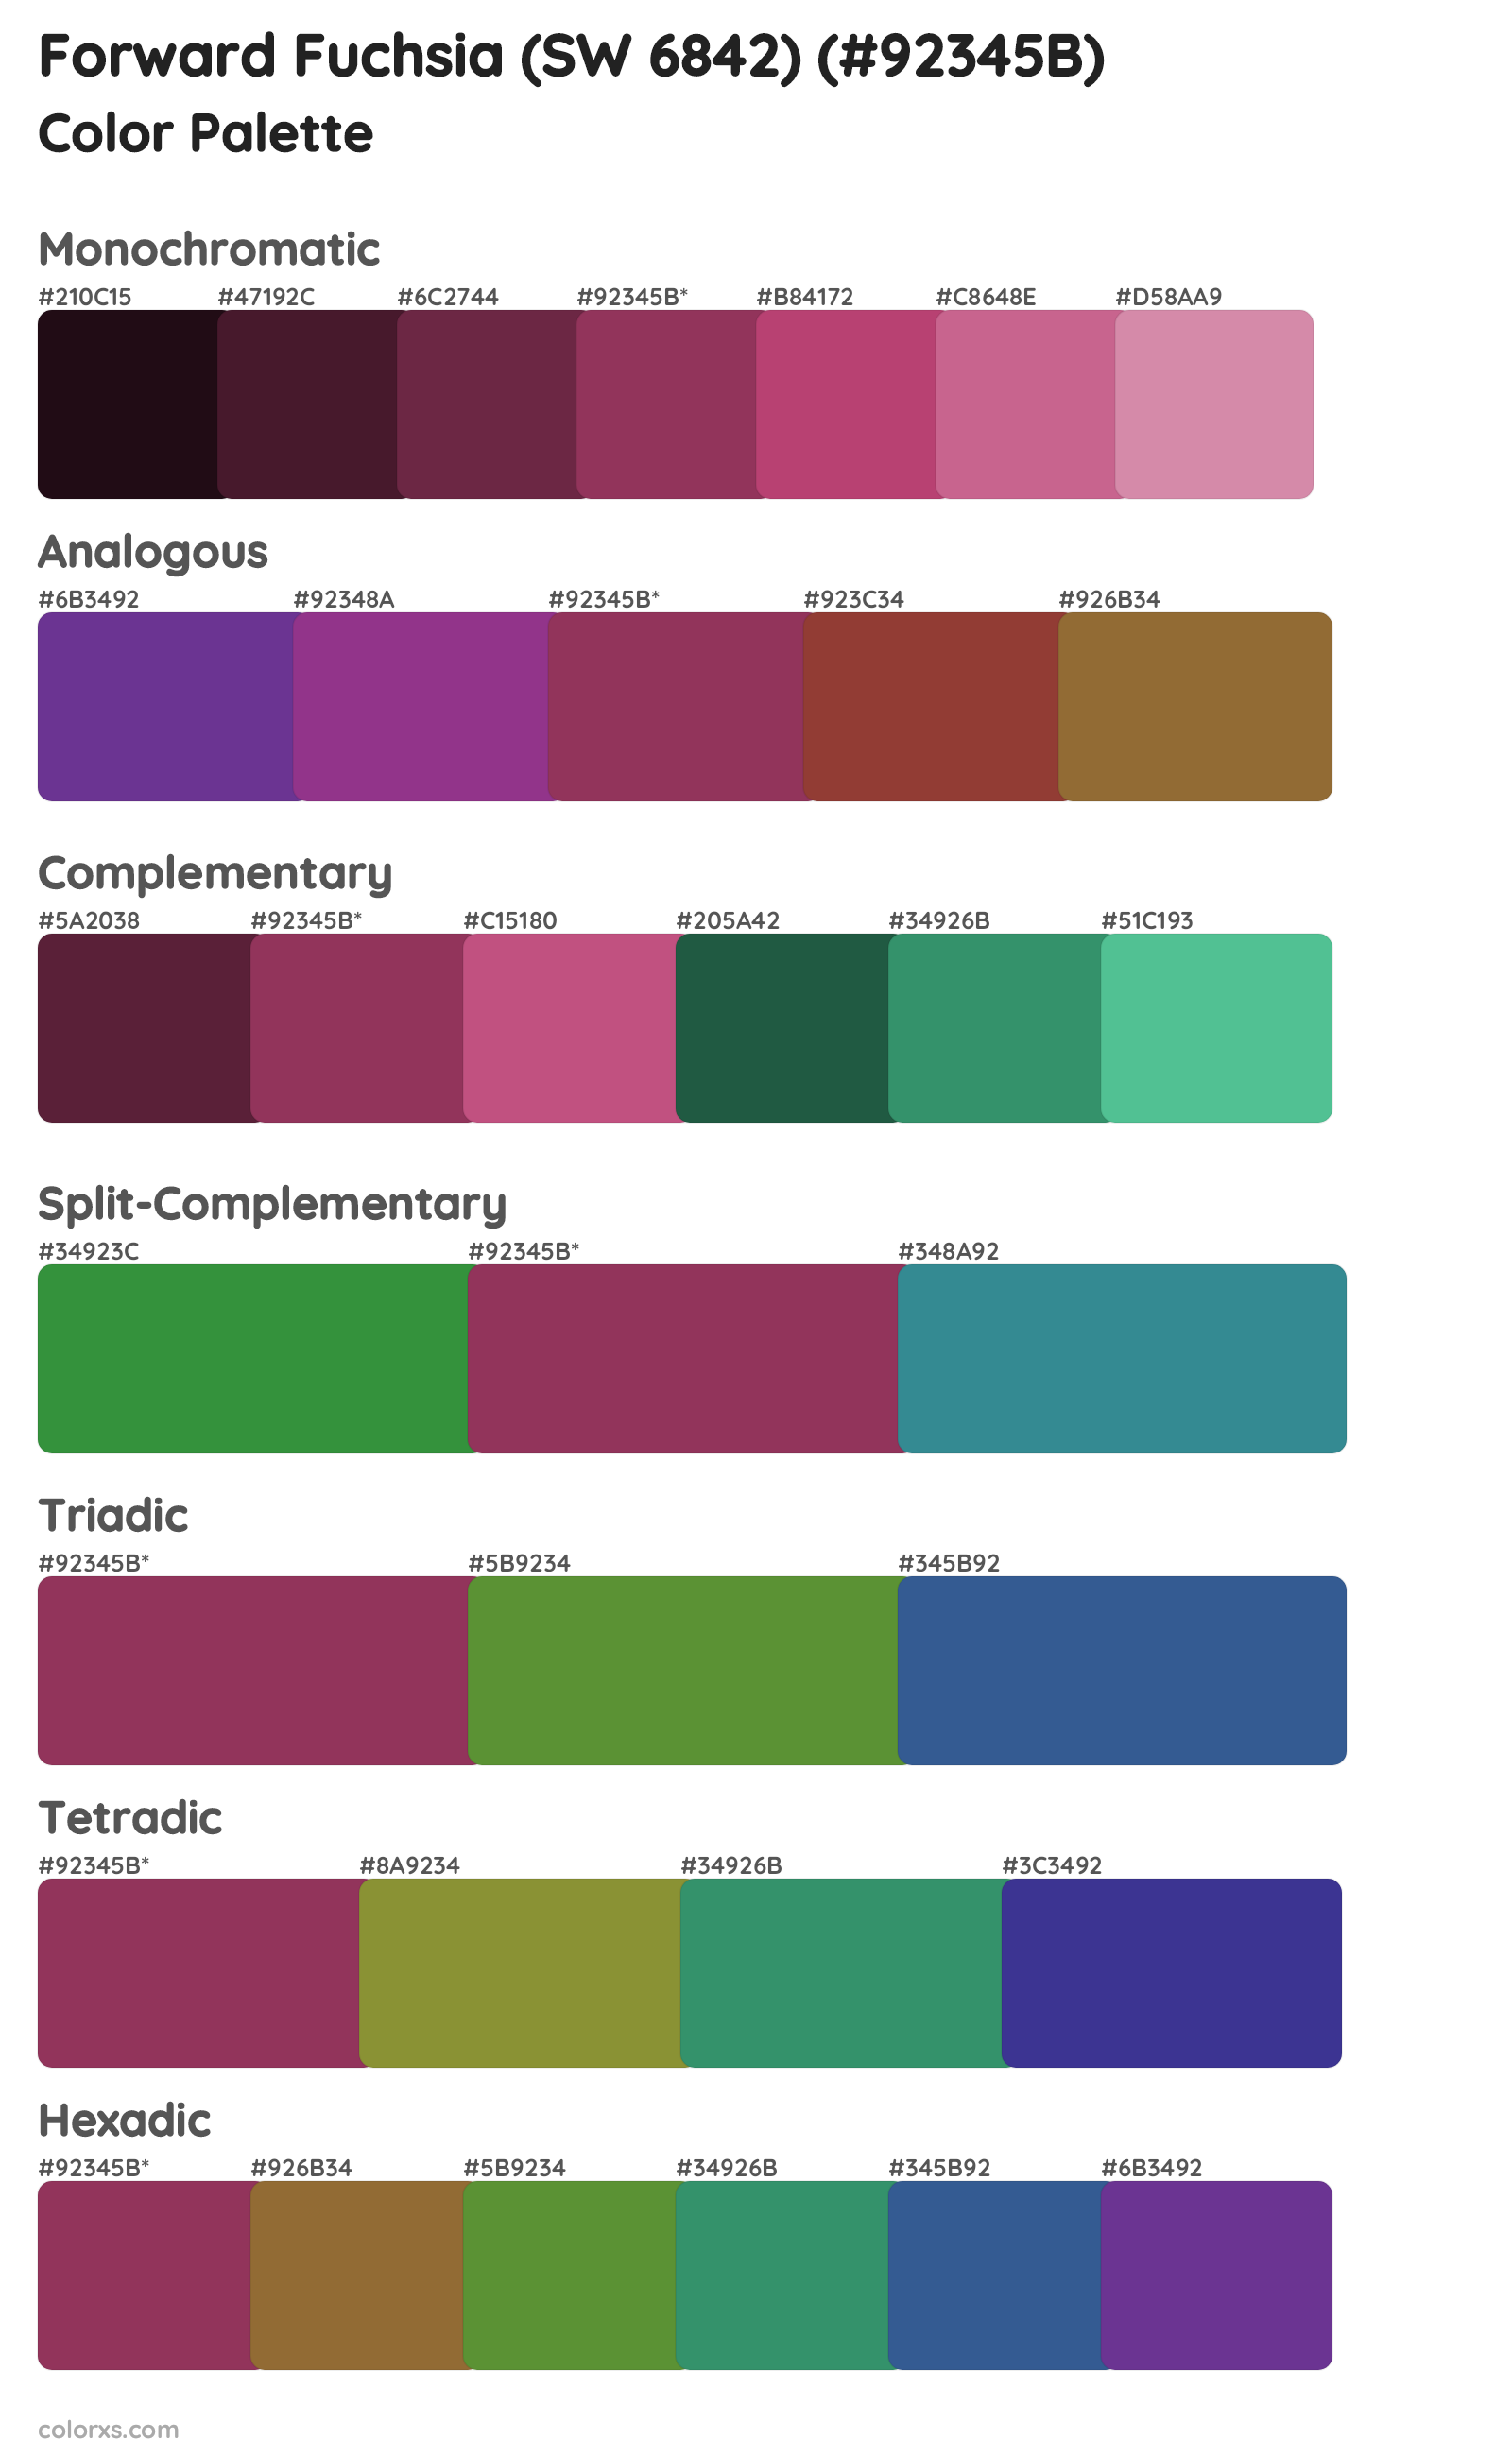 Forward Fuchsia (SW 6842) Color Scheme Palettes